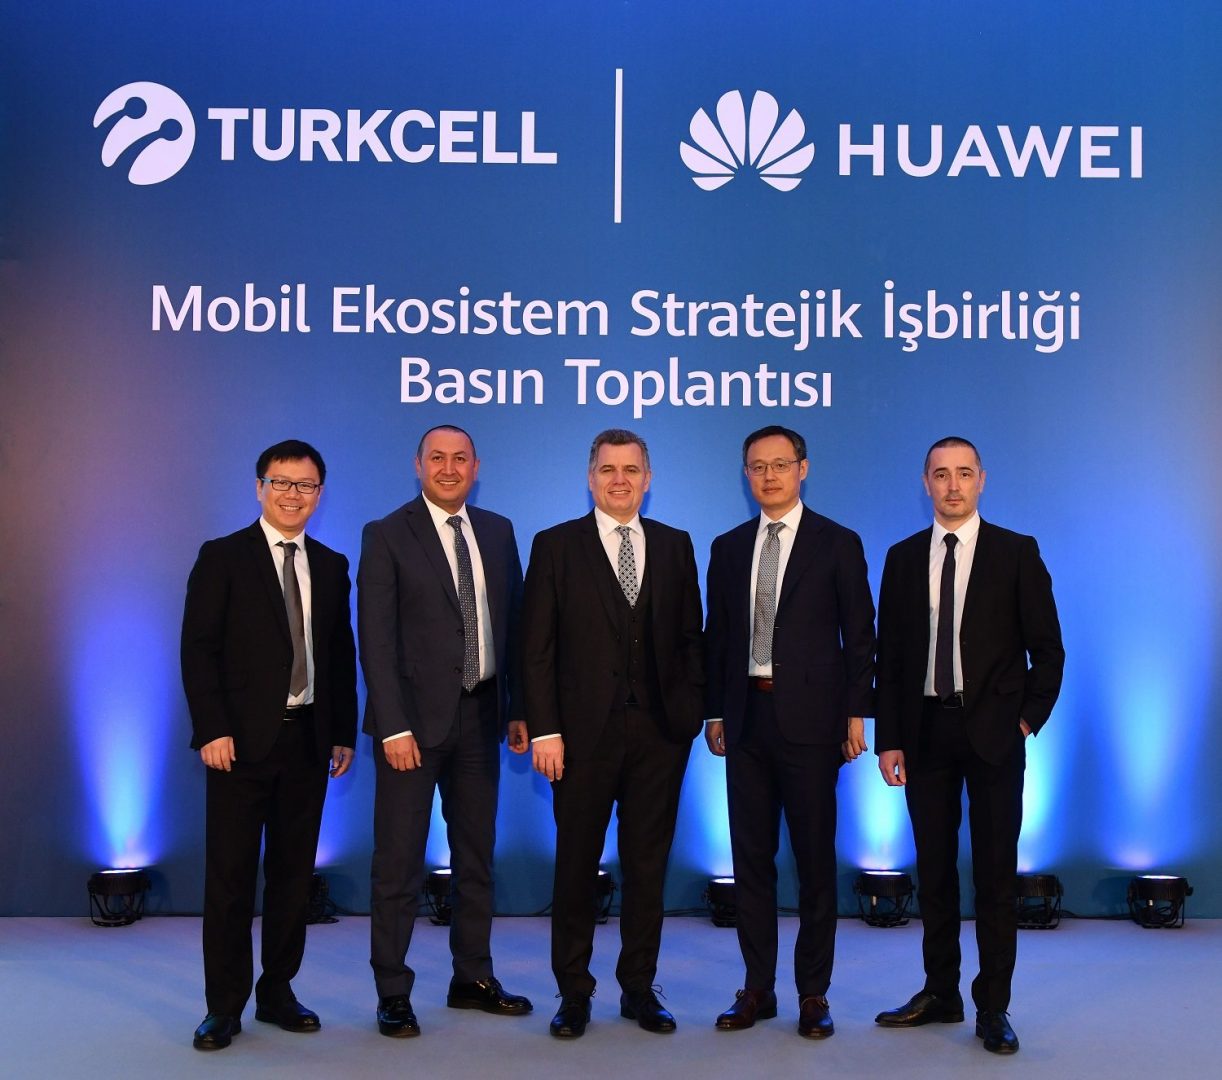 Huawei_Turkcell_Basin_Toplantisi-1-1222x1080.jpg